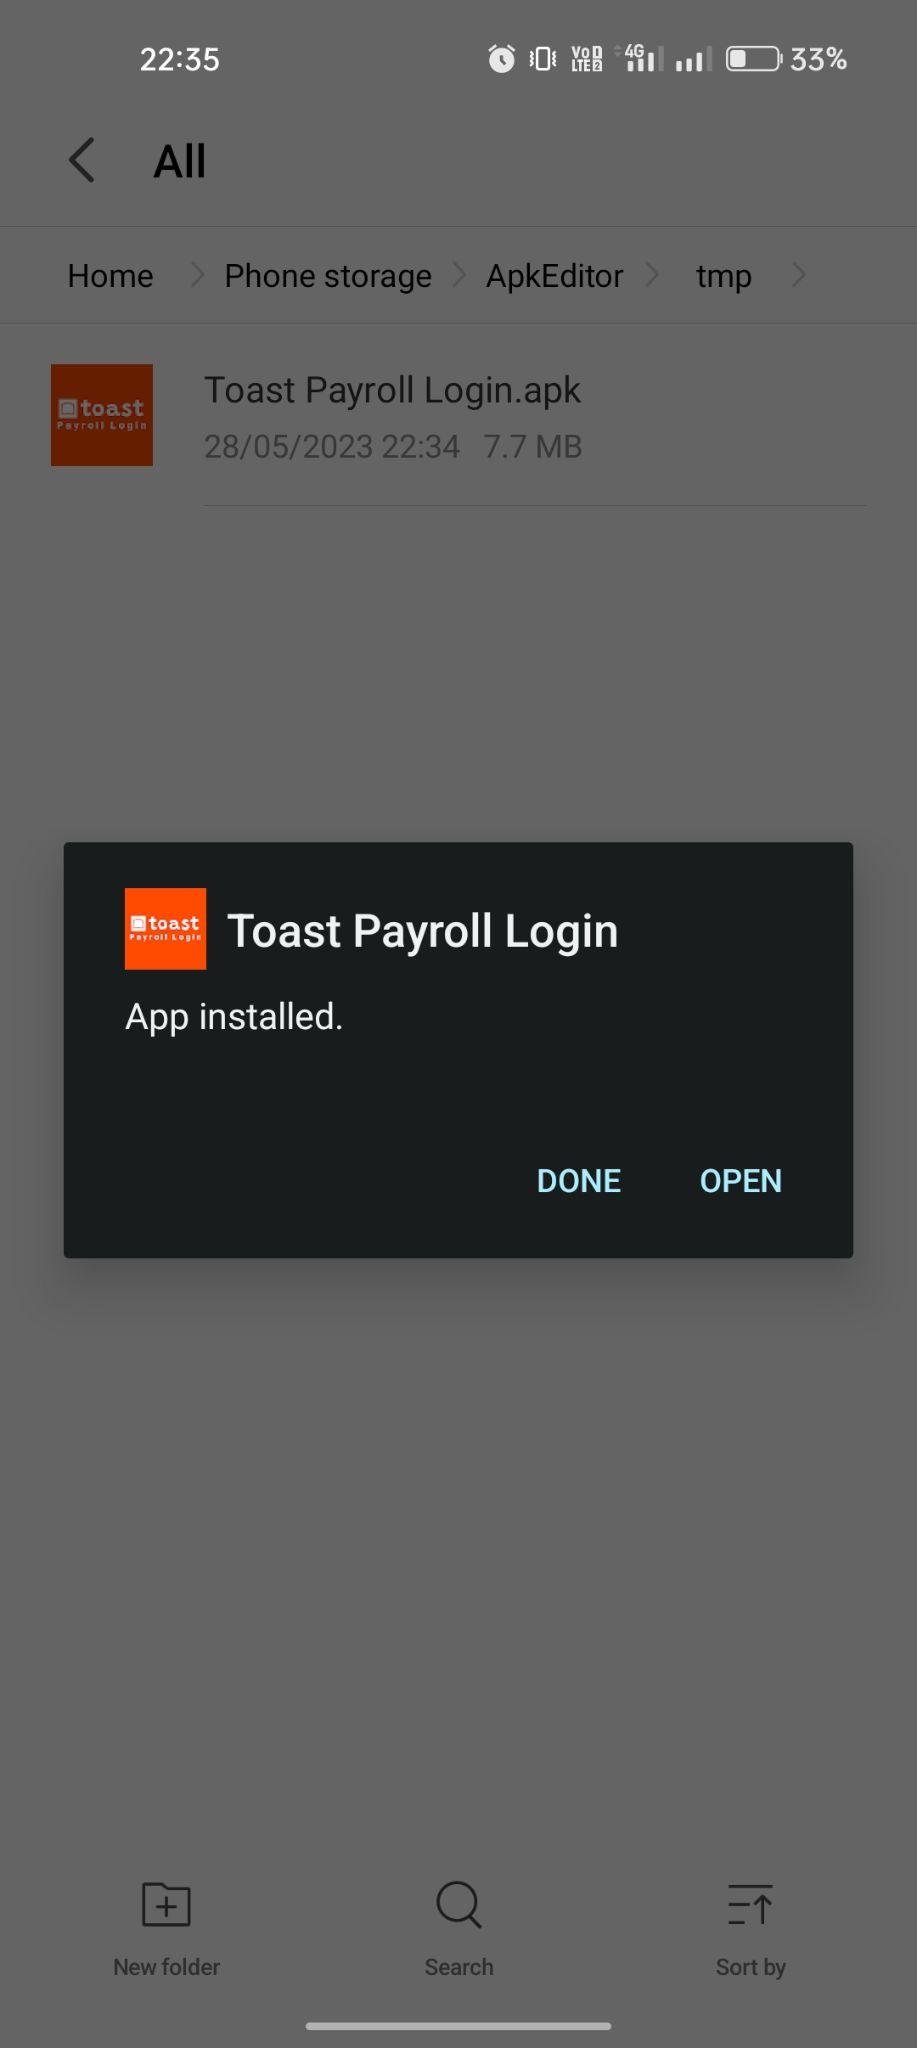 Toast Payroll Login apk installed